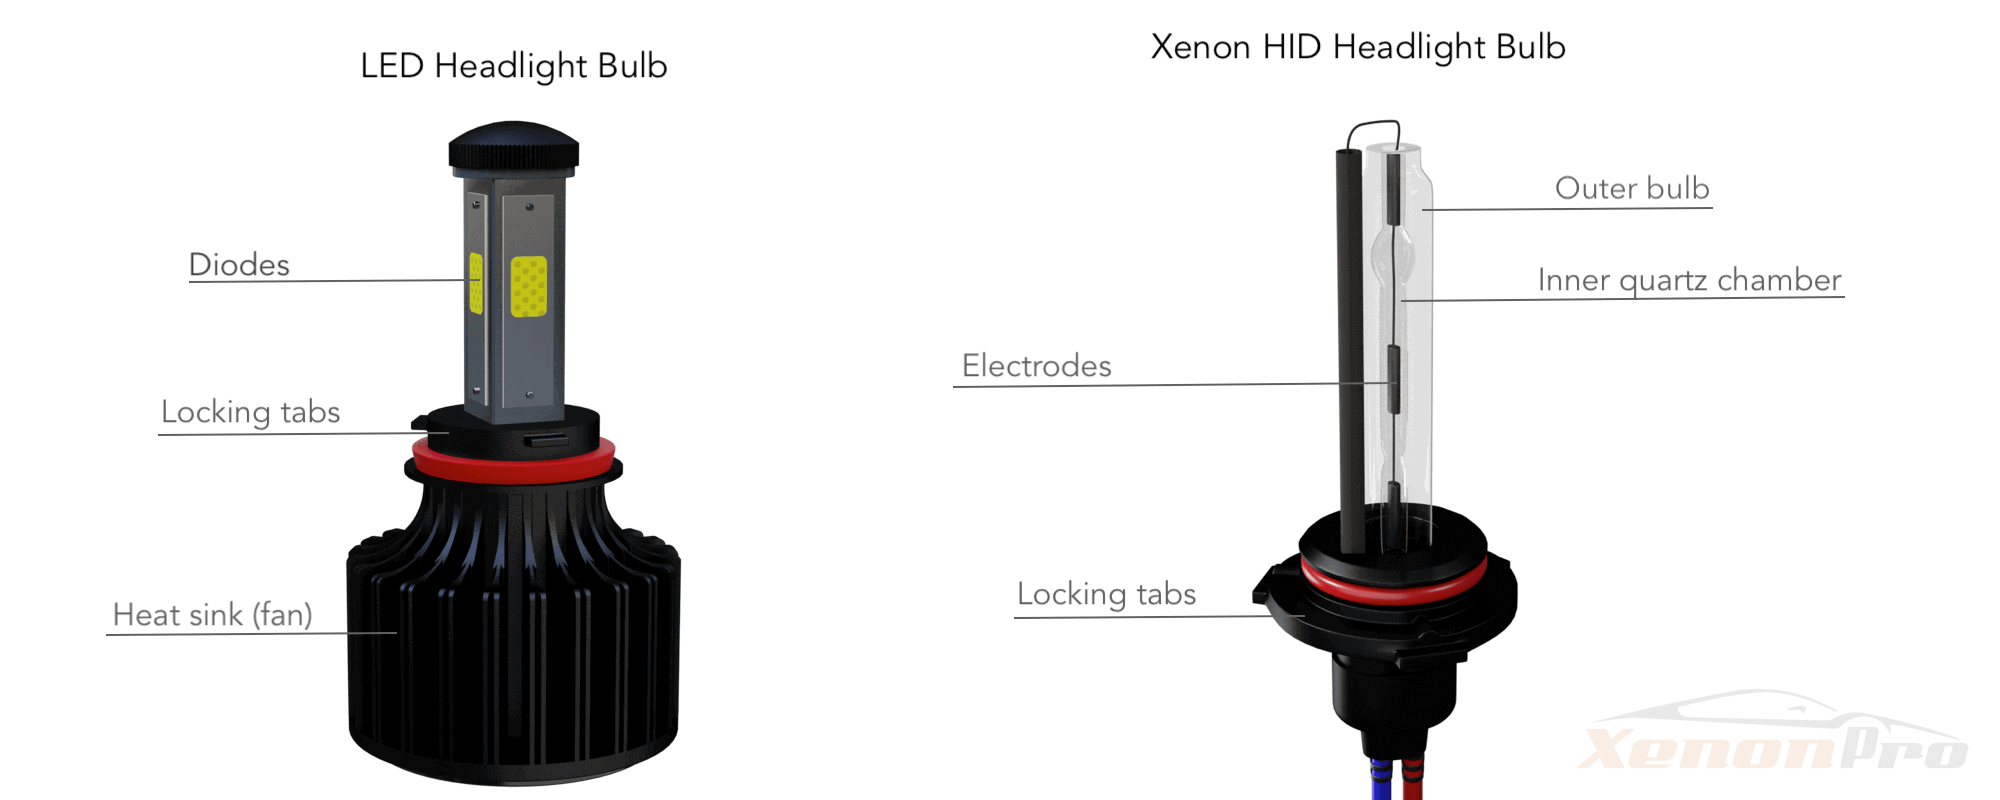 latitude Formation Make it heavy LED vs Xenon HID Headlights - Which Are Better? - XenonPro.com